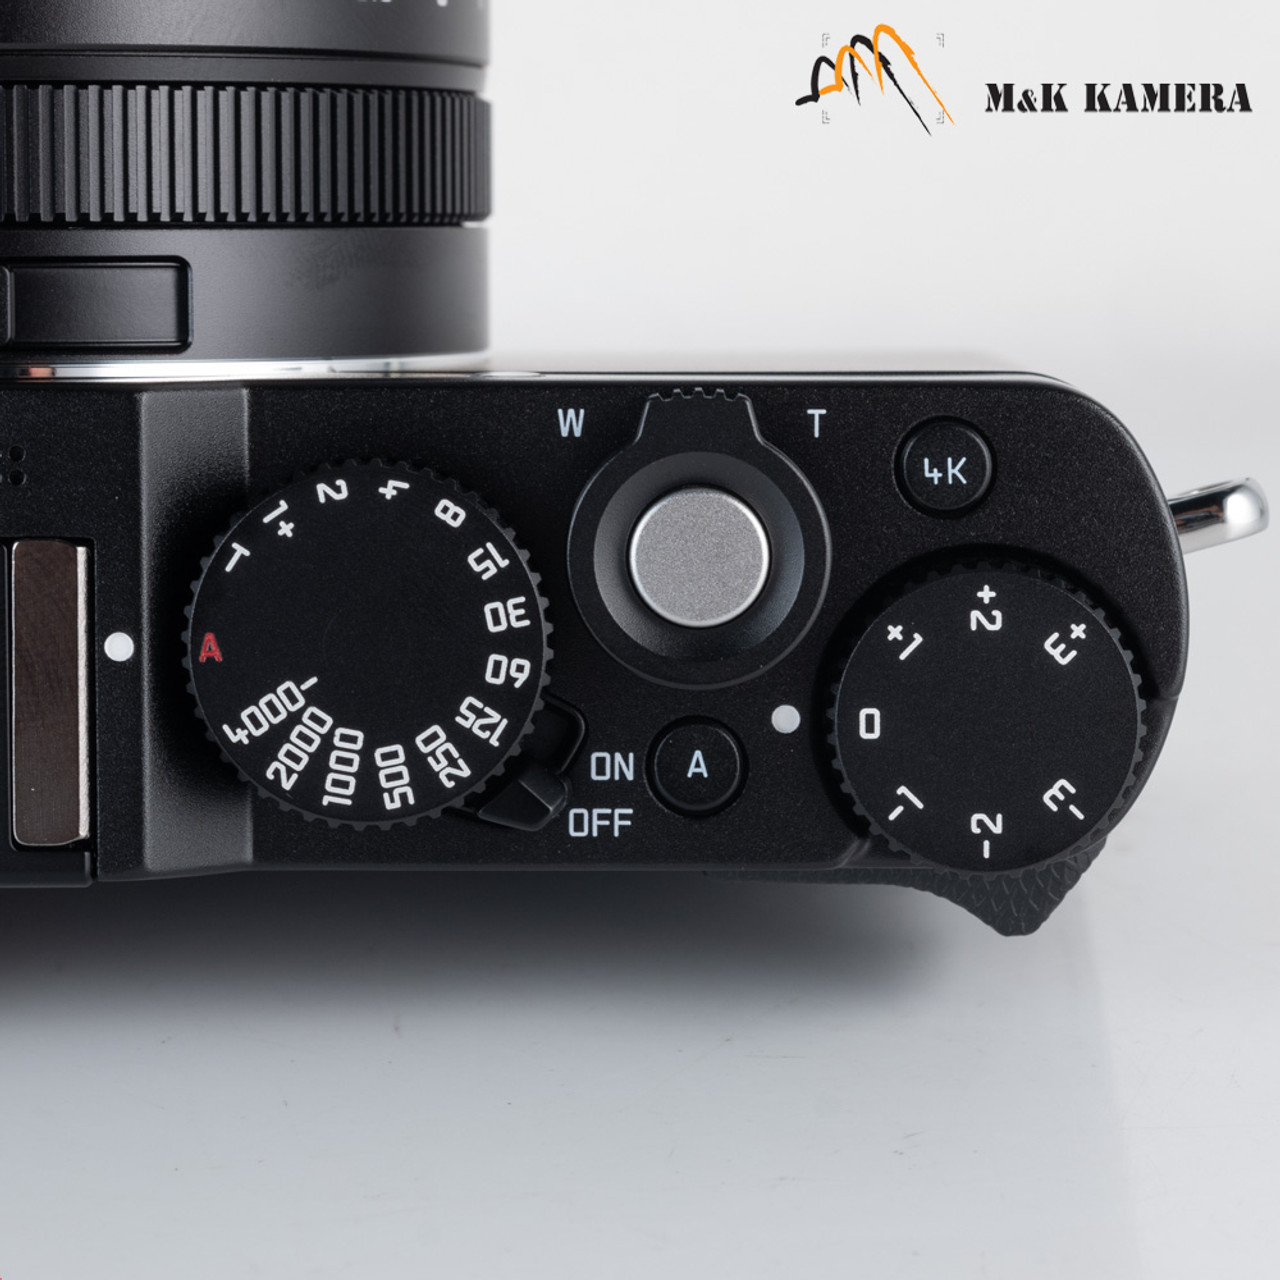 Leica D - Lux 7 Digital Camera (Black) (19141) + 64GB Extreme Pro Card +  Card Reader + Case + Cleaning Set + Memory Wallet - Starter Bundle 